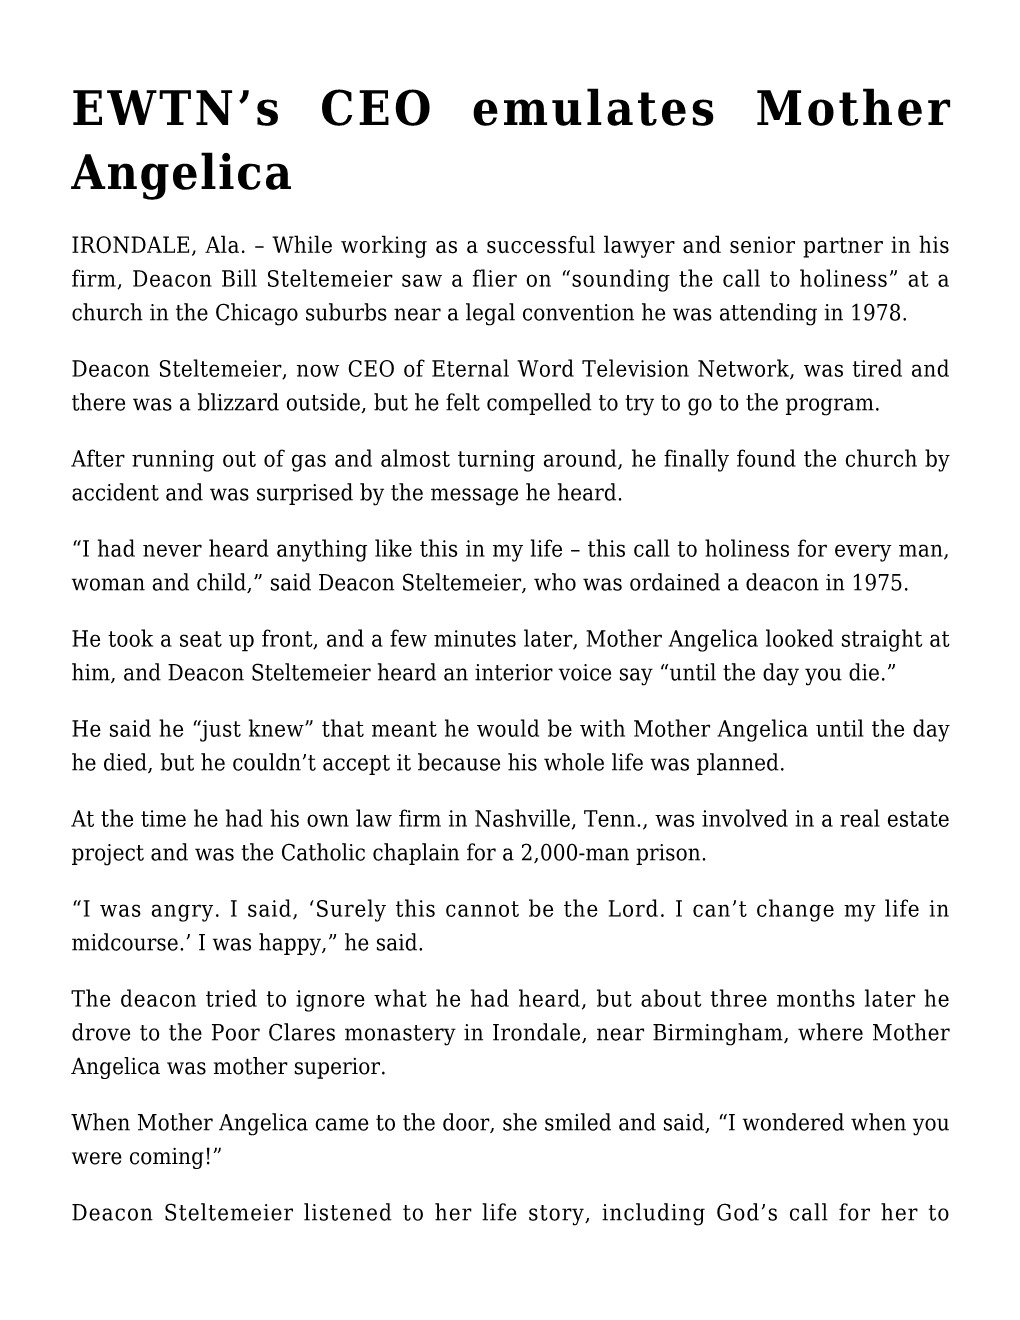 EWTN's CEO Emulates Mother Angelica